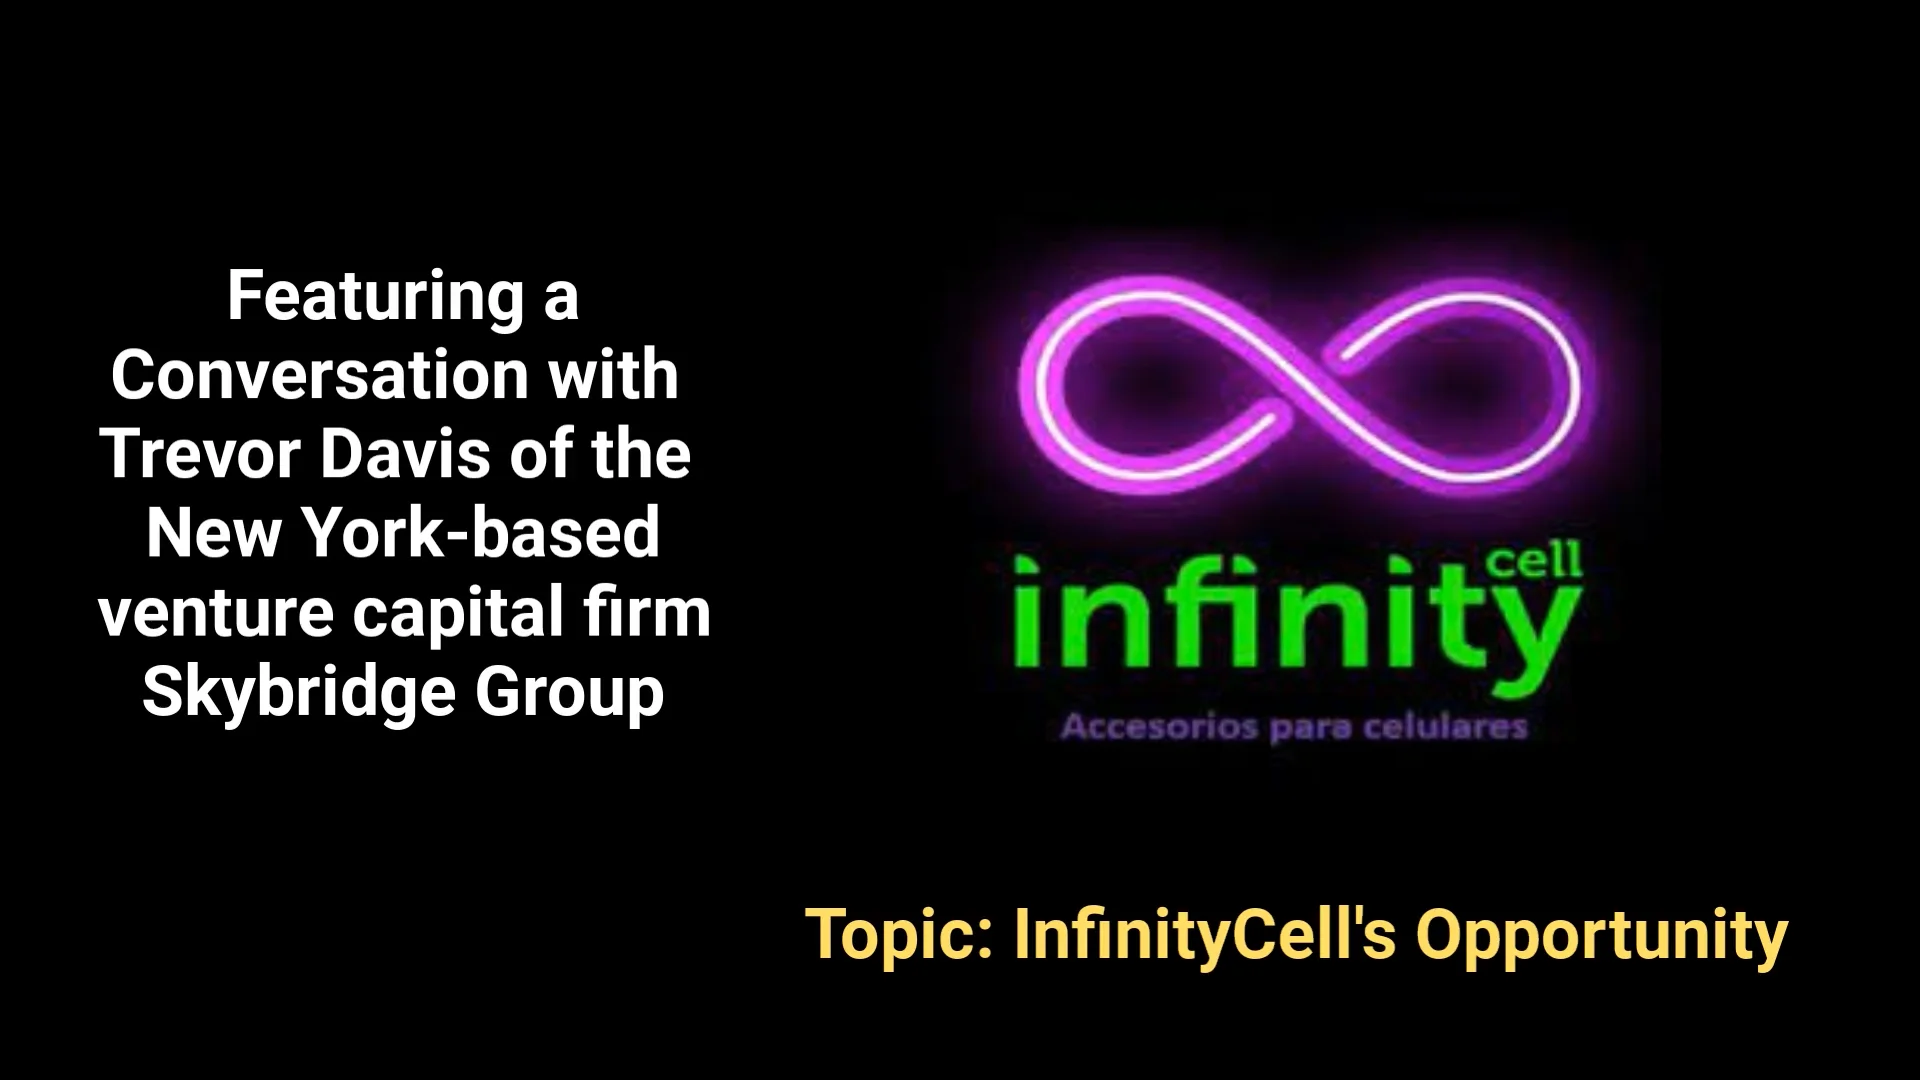 Opportunity Spotlight Video: A conversation with Trevor Davis regarding InfinityCell's opportunity